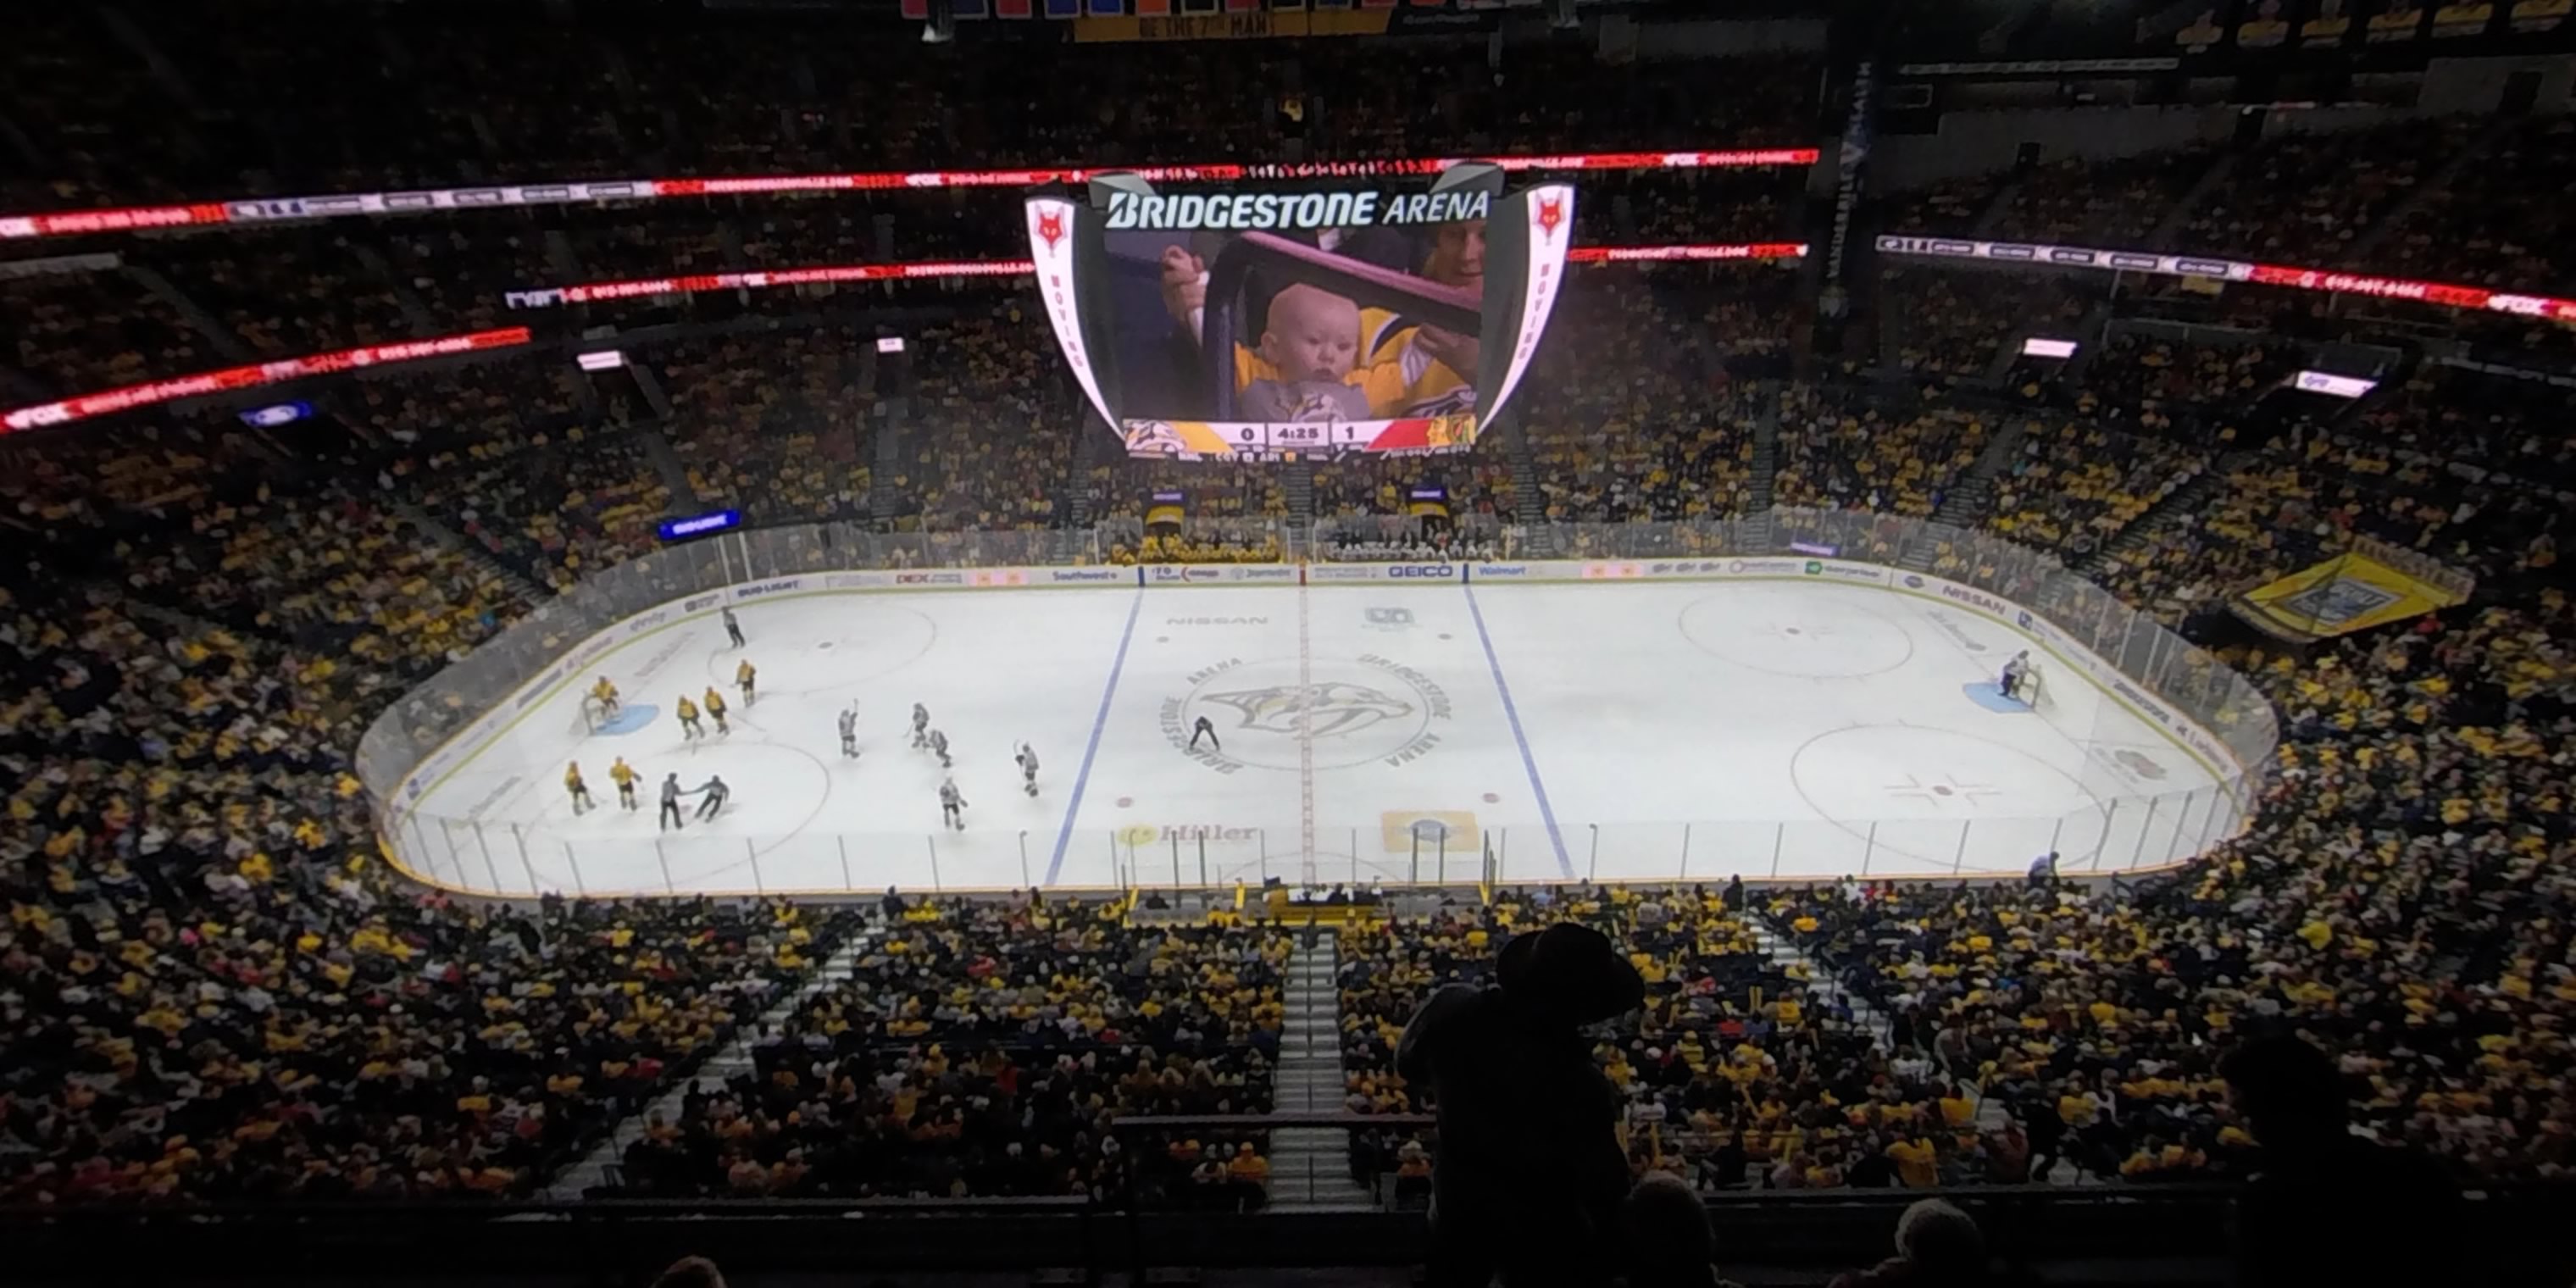 section 309 panoramic seat view  for hockey - bridgestone arena